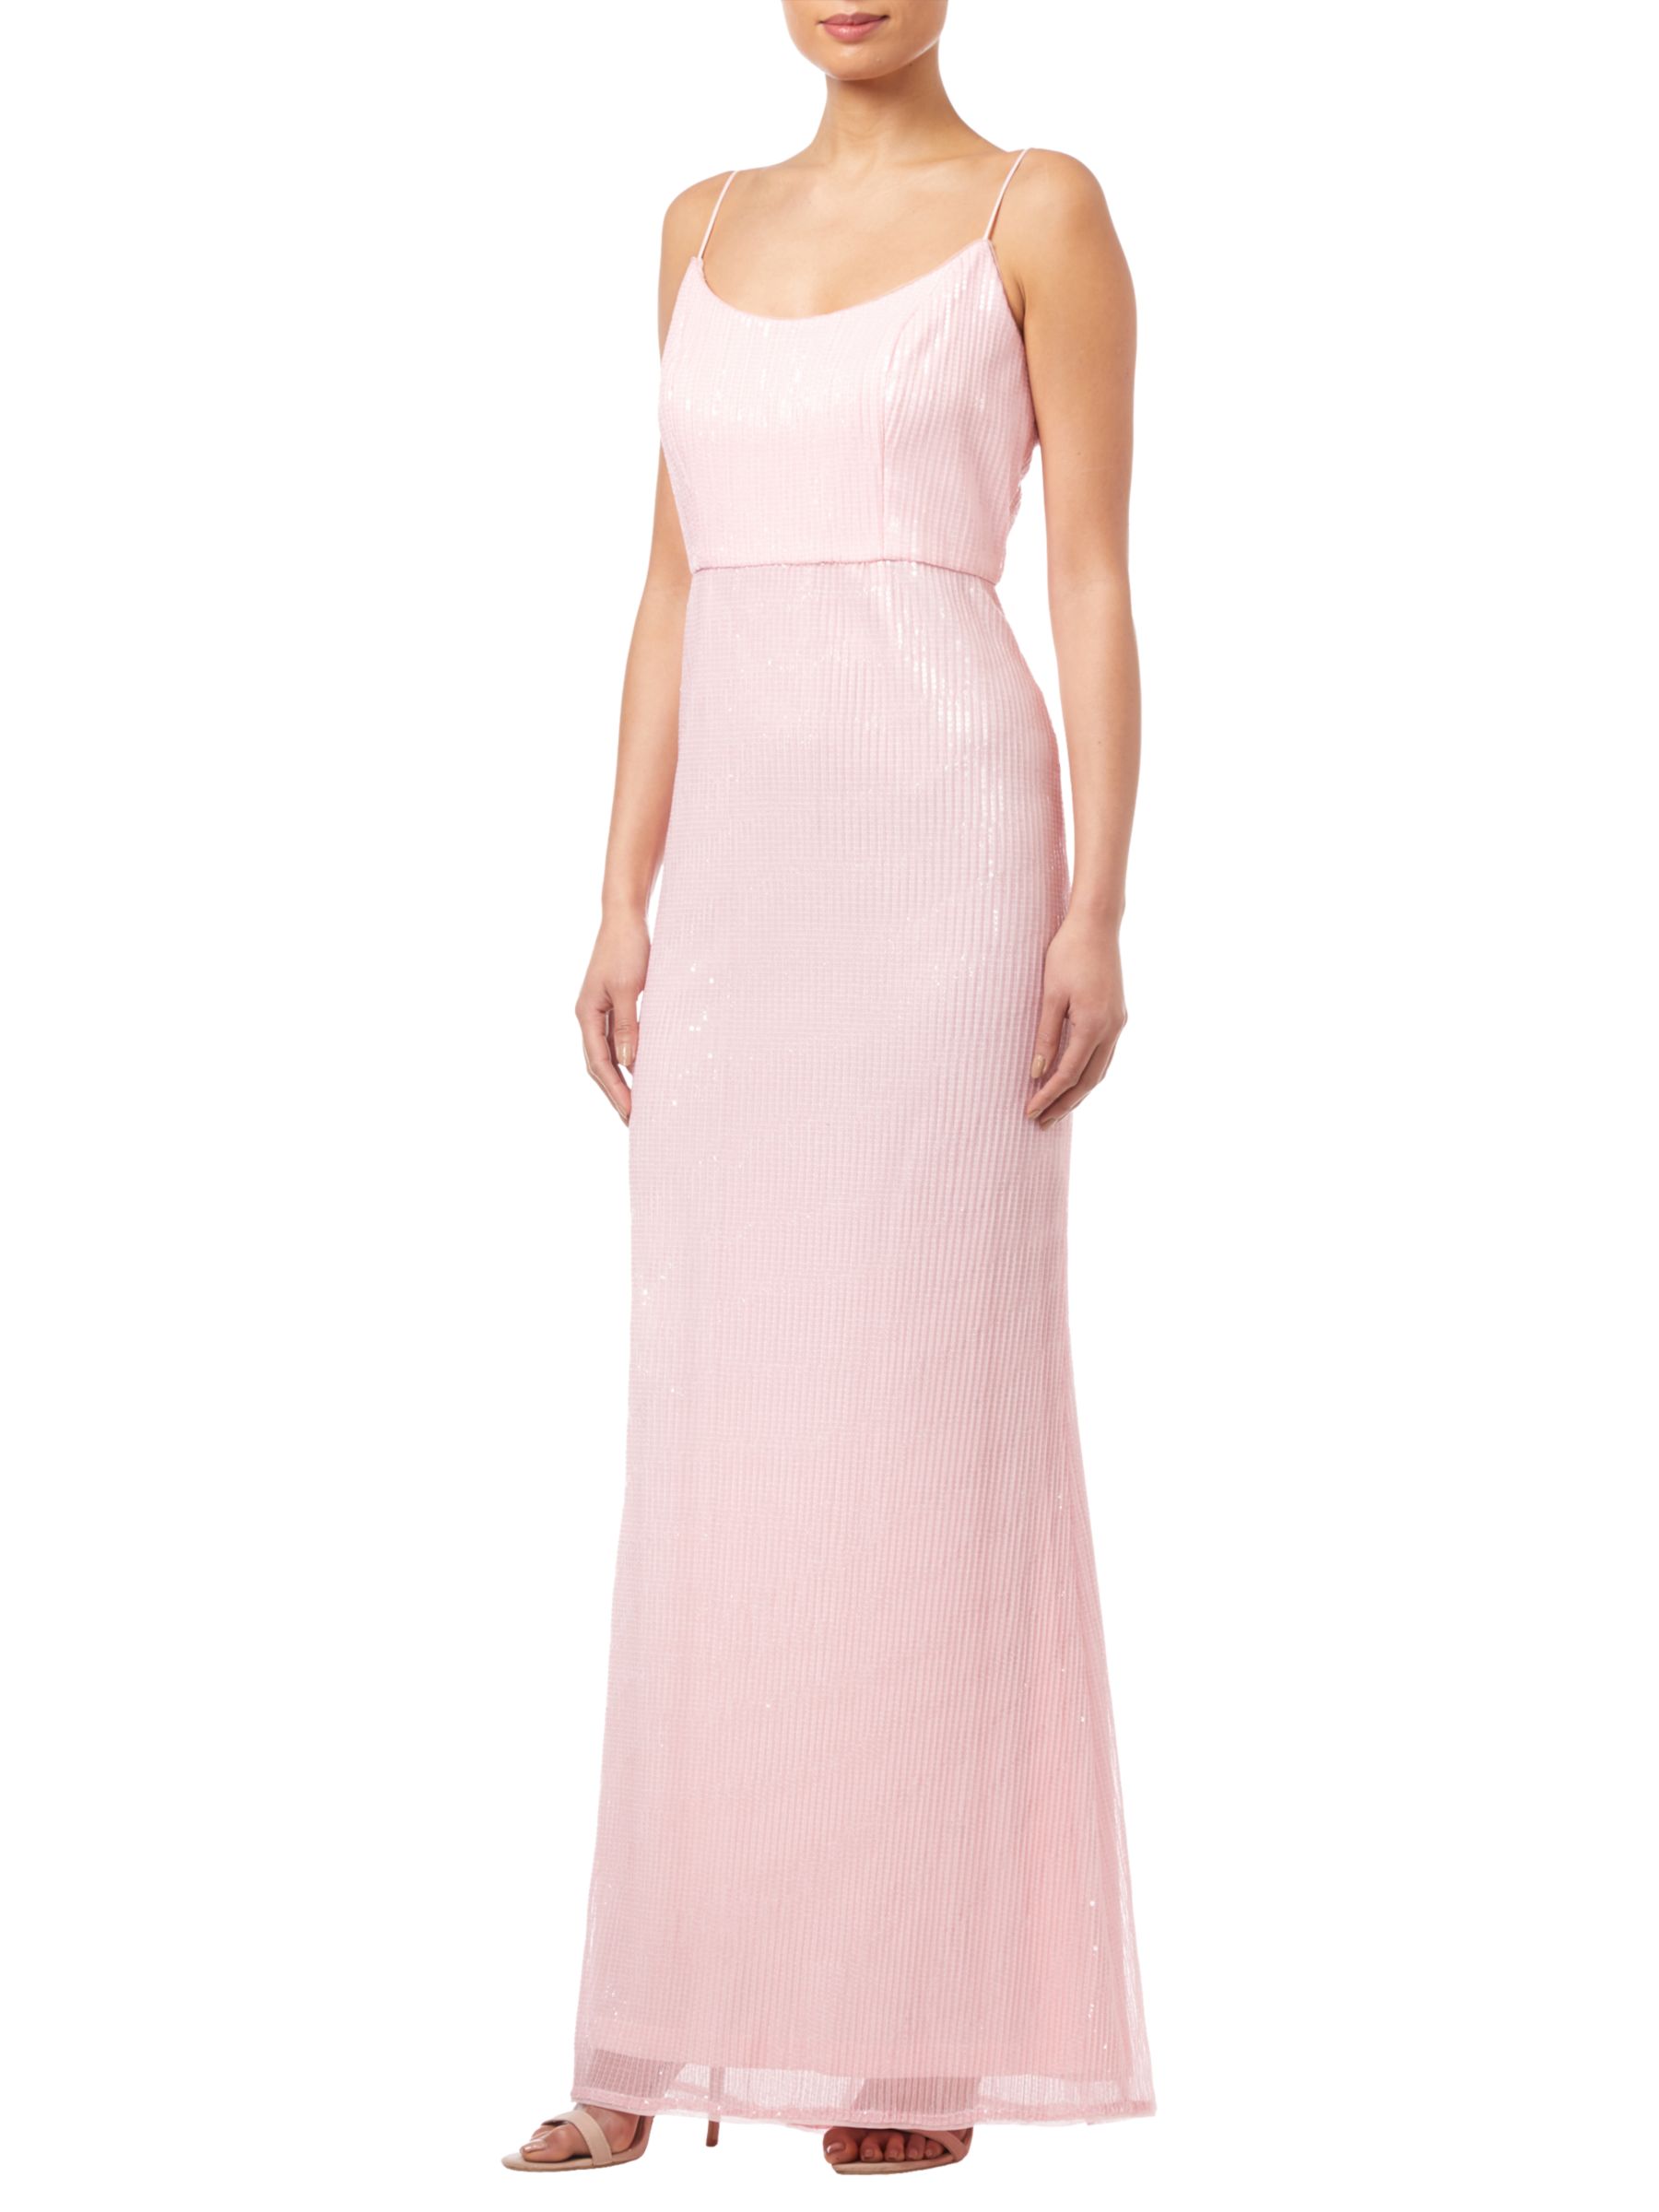 adrianna papell pink dress